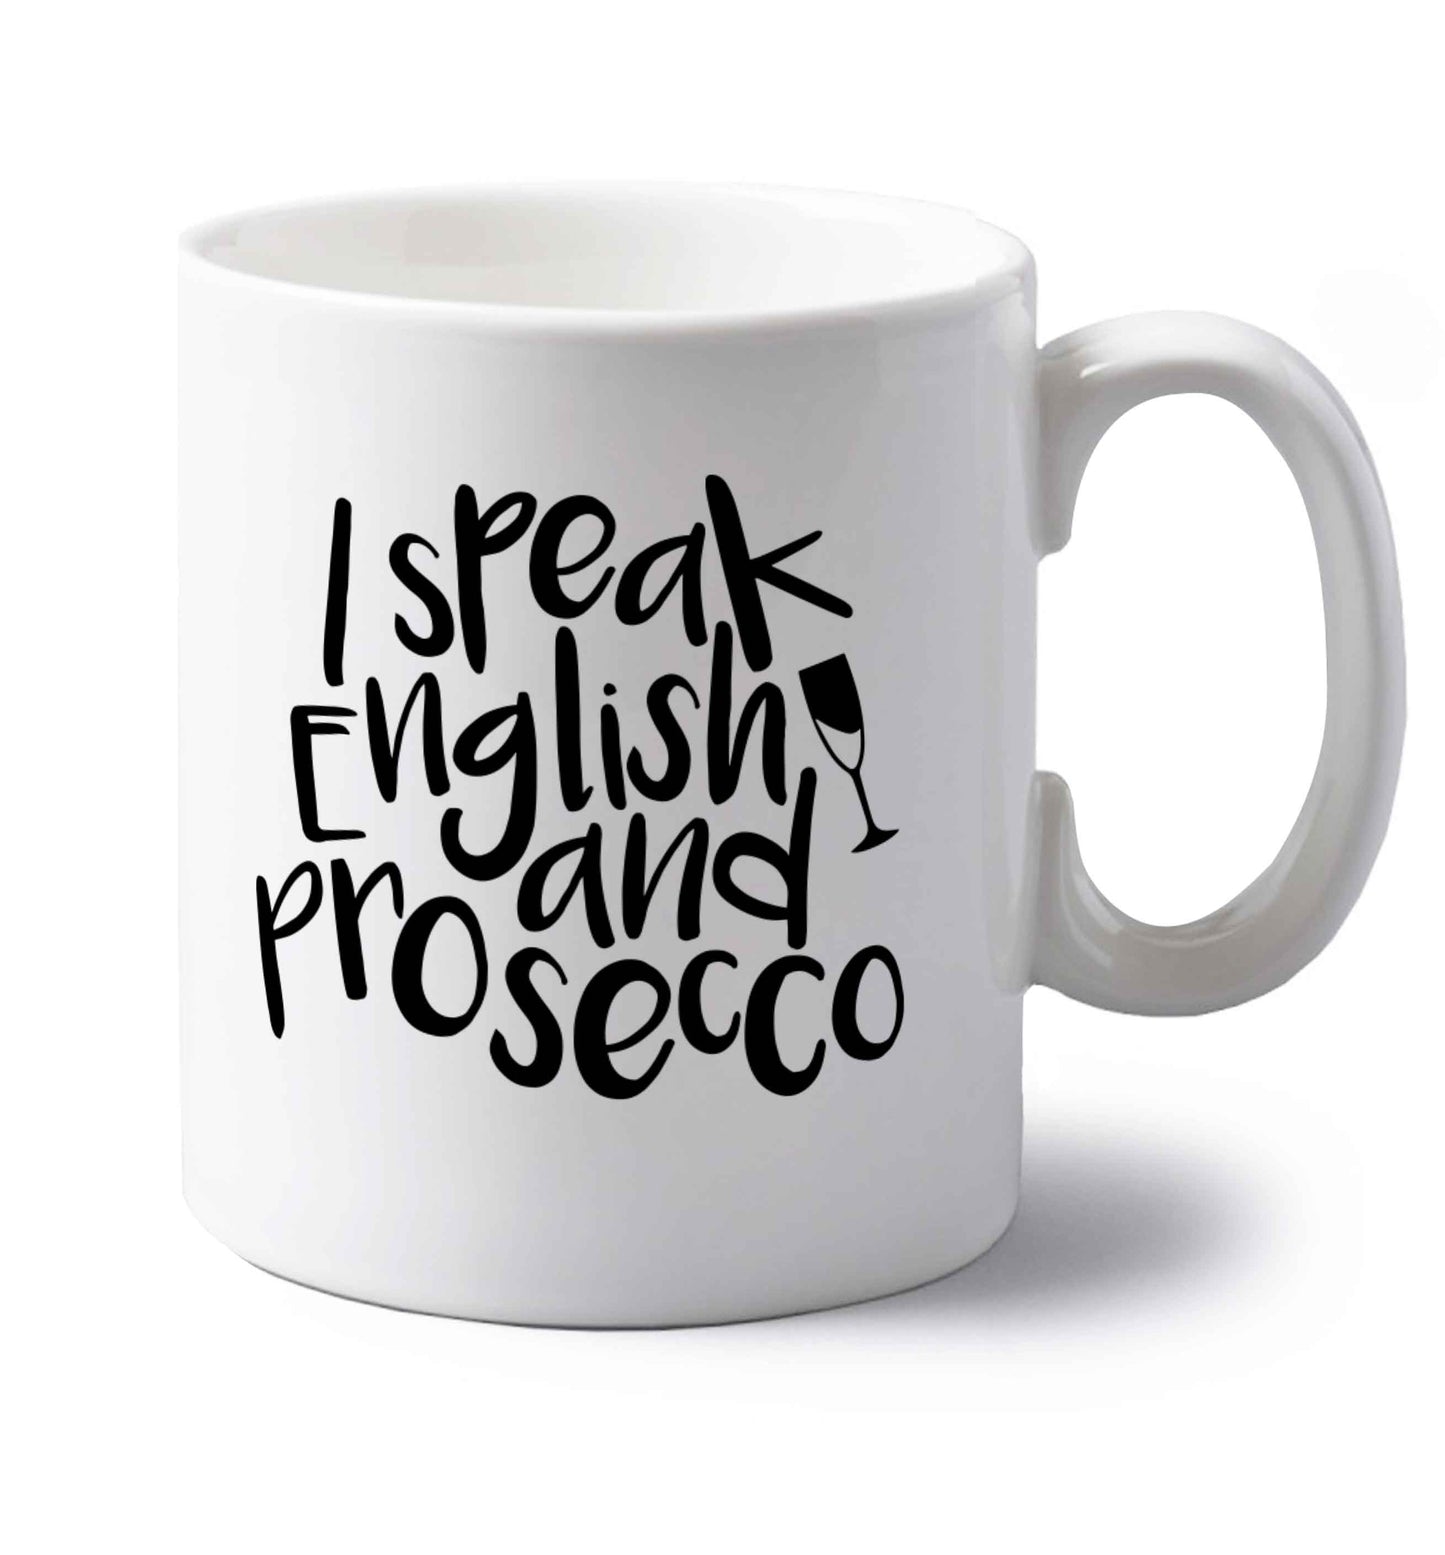 I speak English and prosecco left handed white ceramic mug 